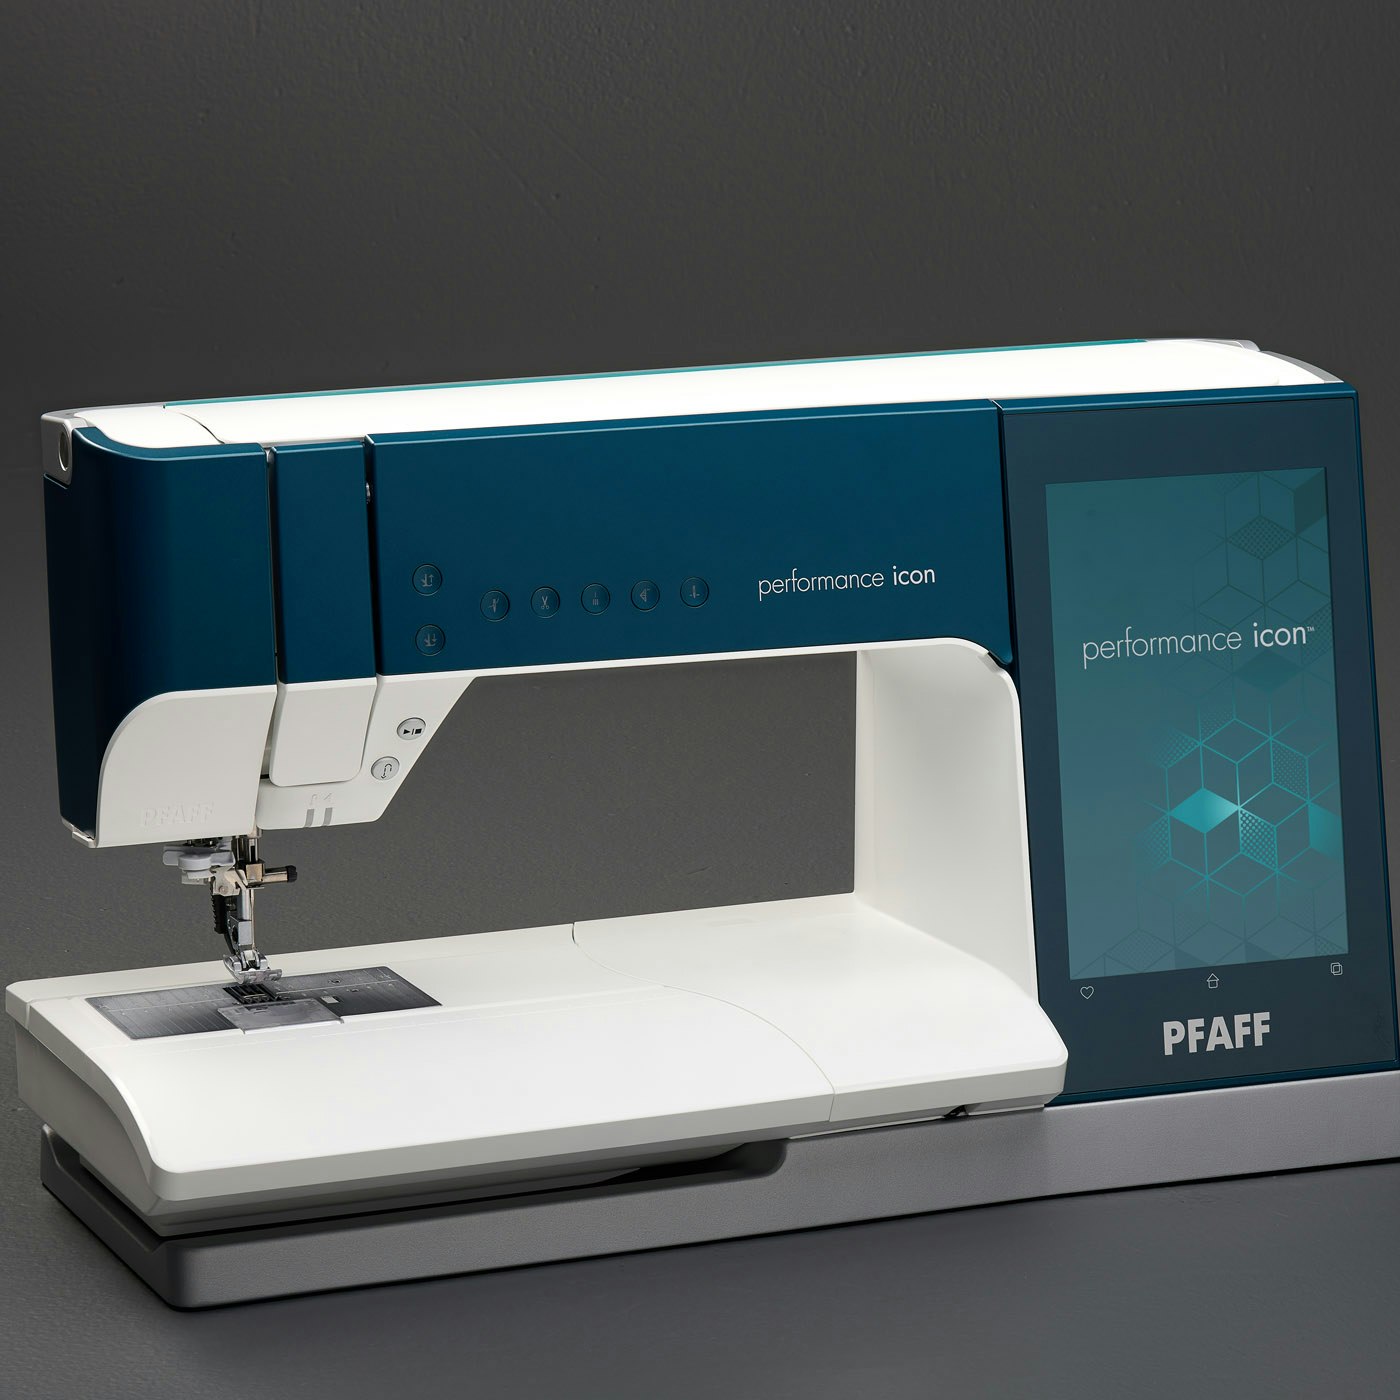 Pfaff performance icon™ symaskin